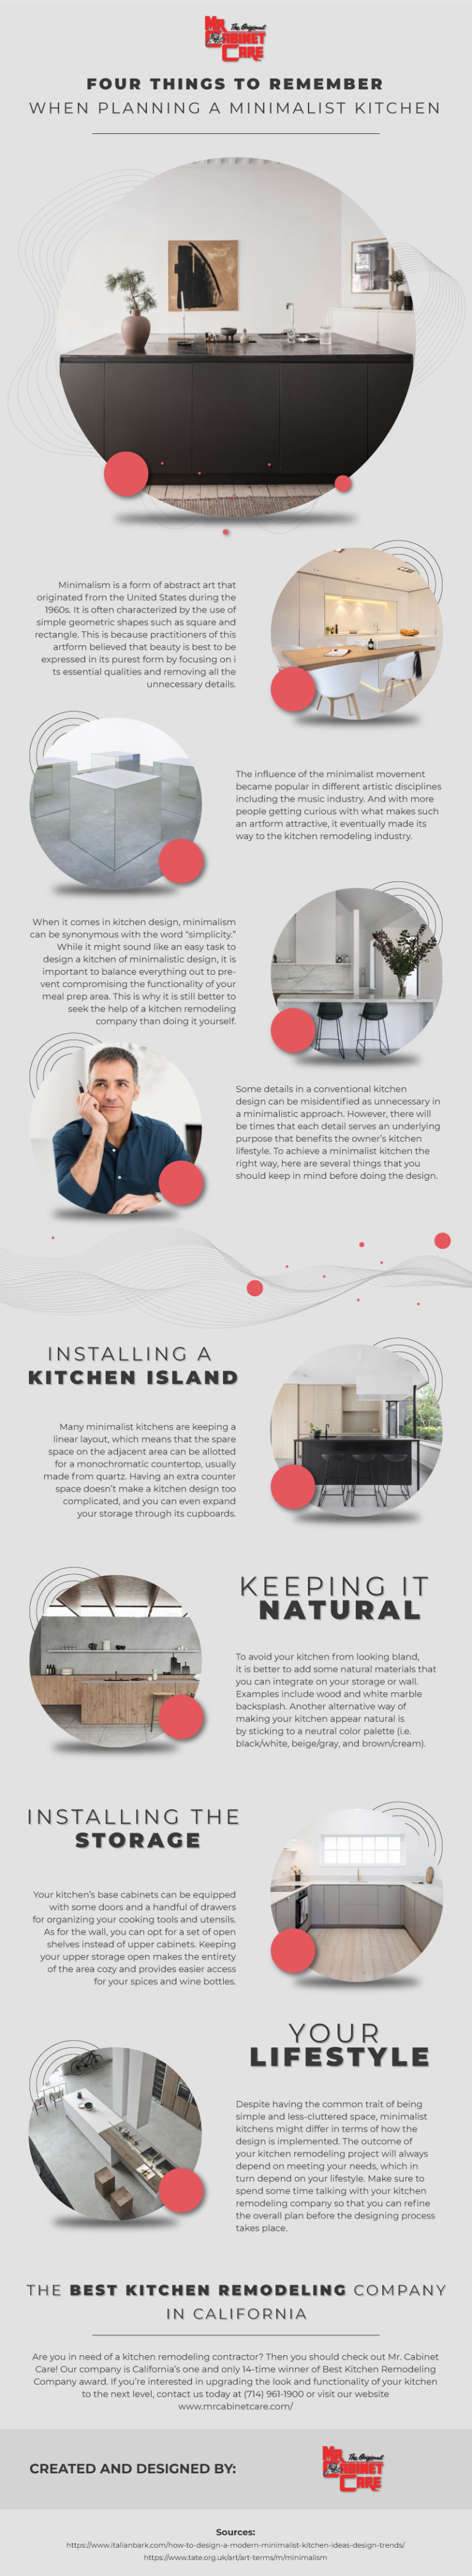 minimalist kitchen - infographic